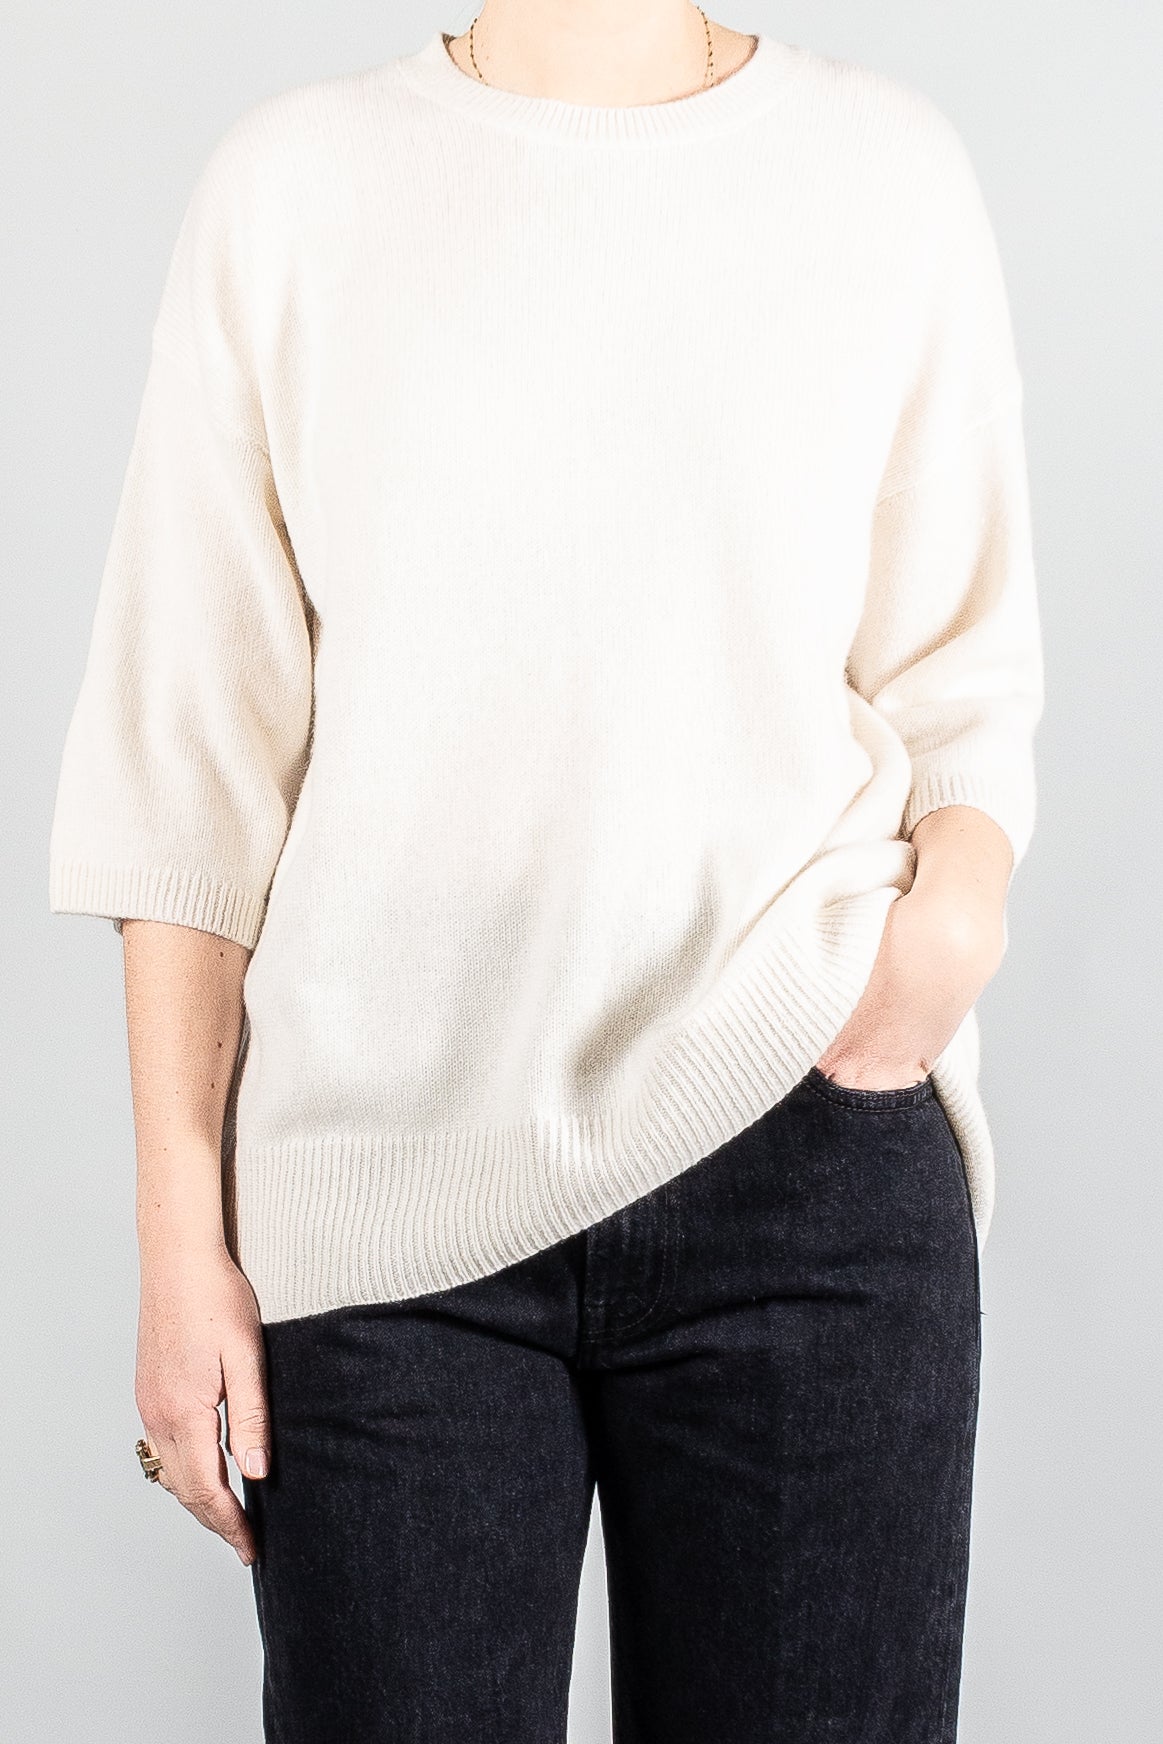 Lisa Yang Camille Sweater